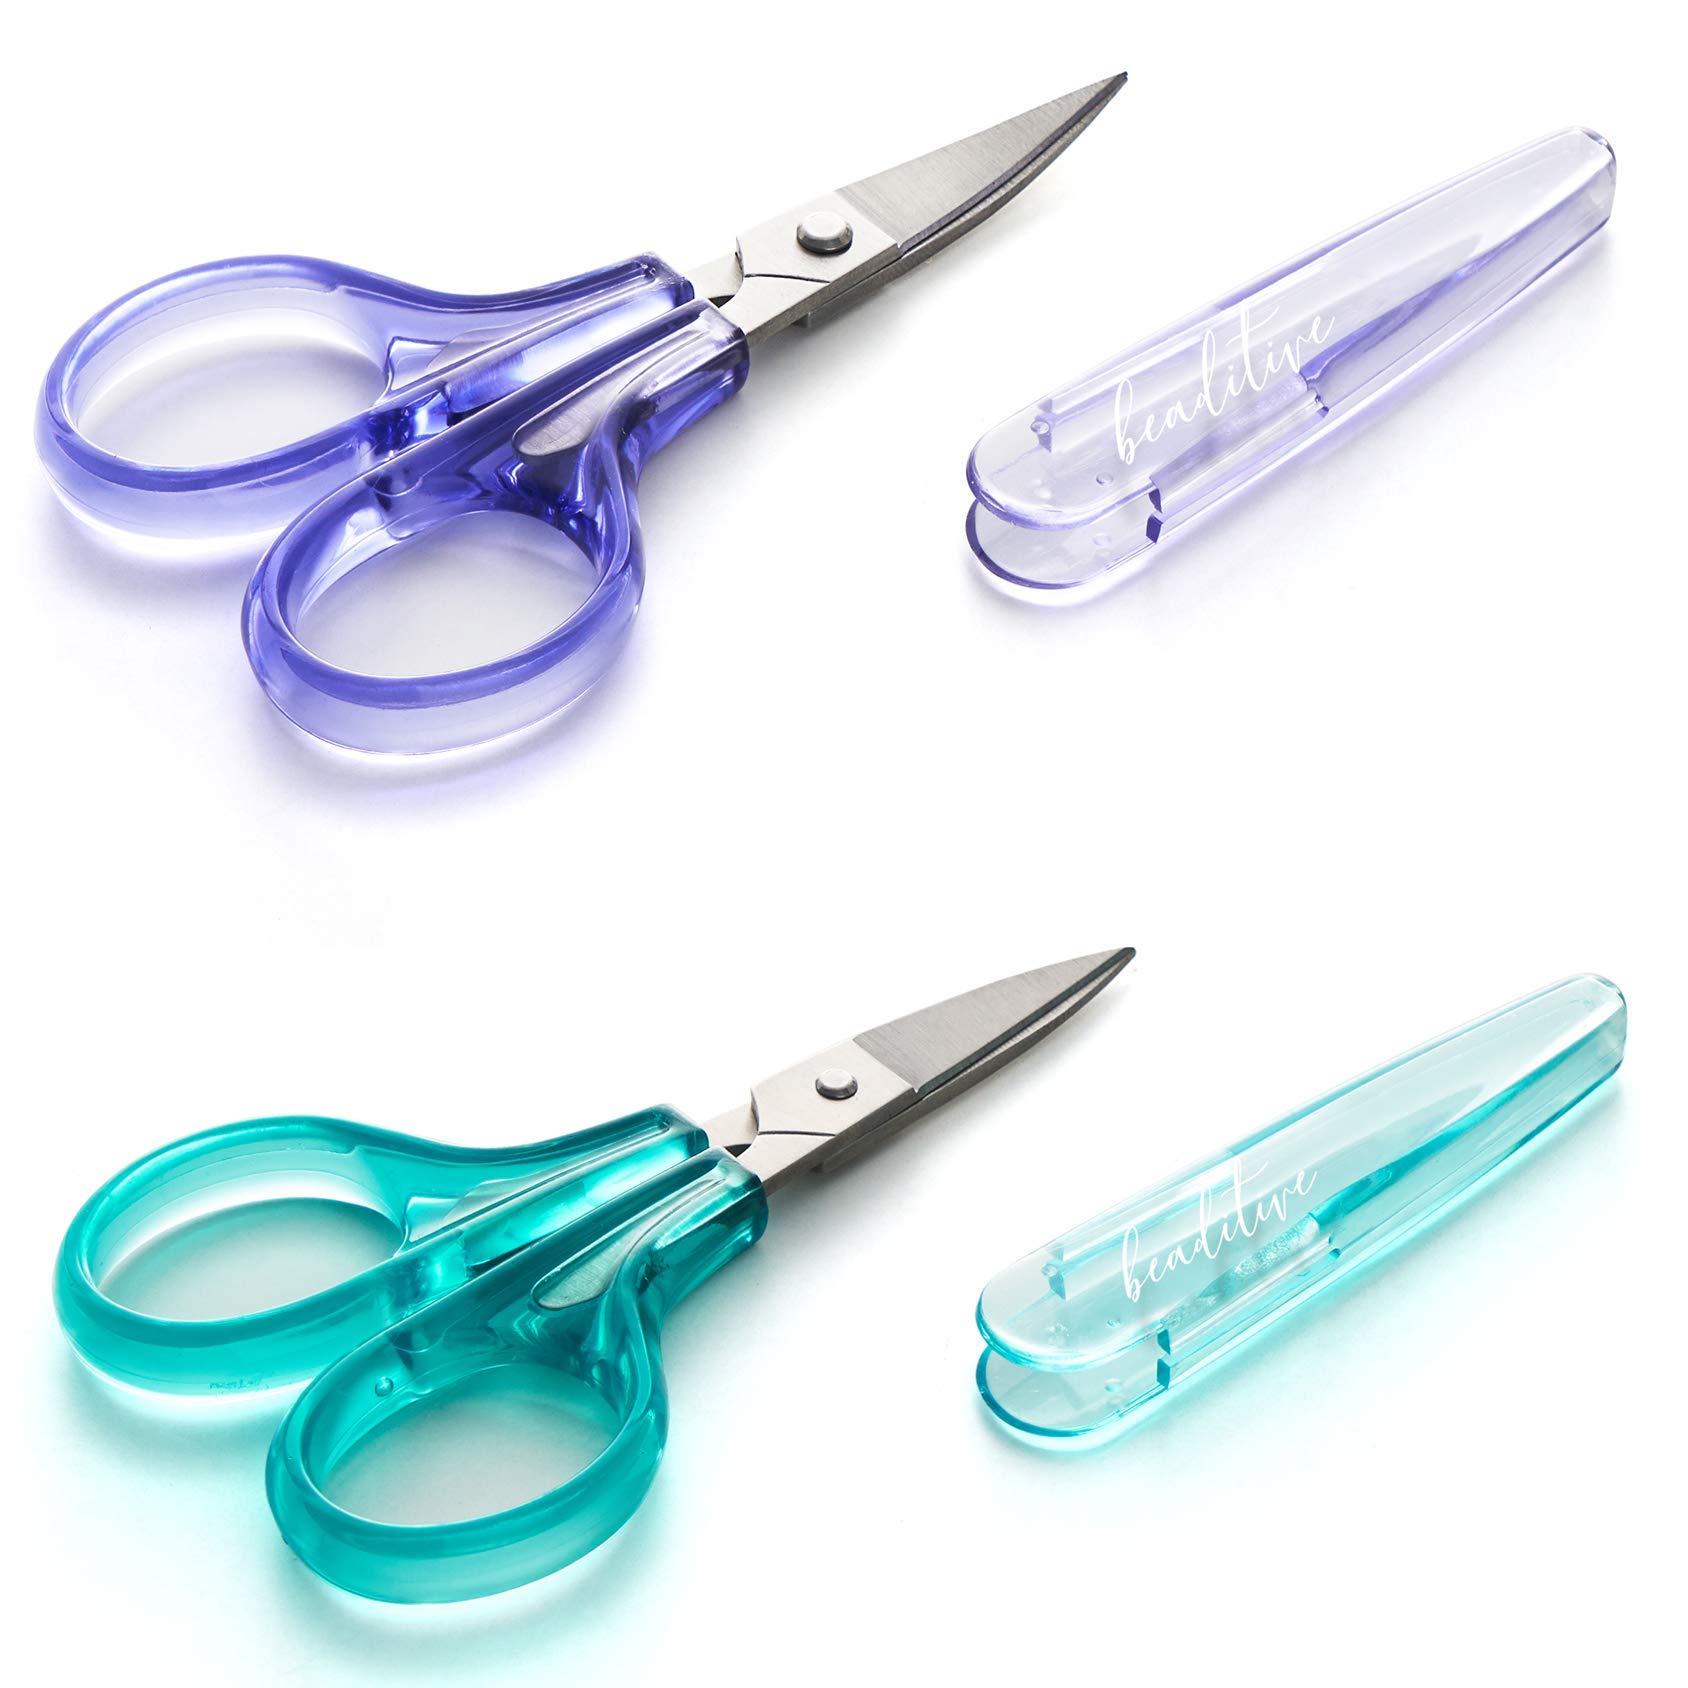  Beaditive Baby Food Scissors - Stainless Steel